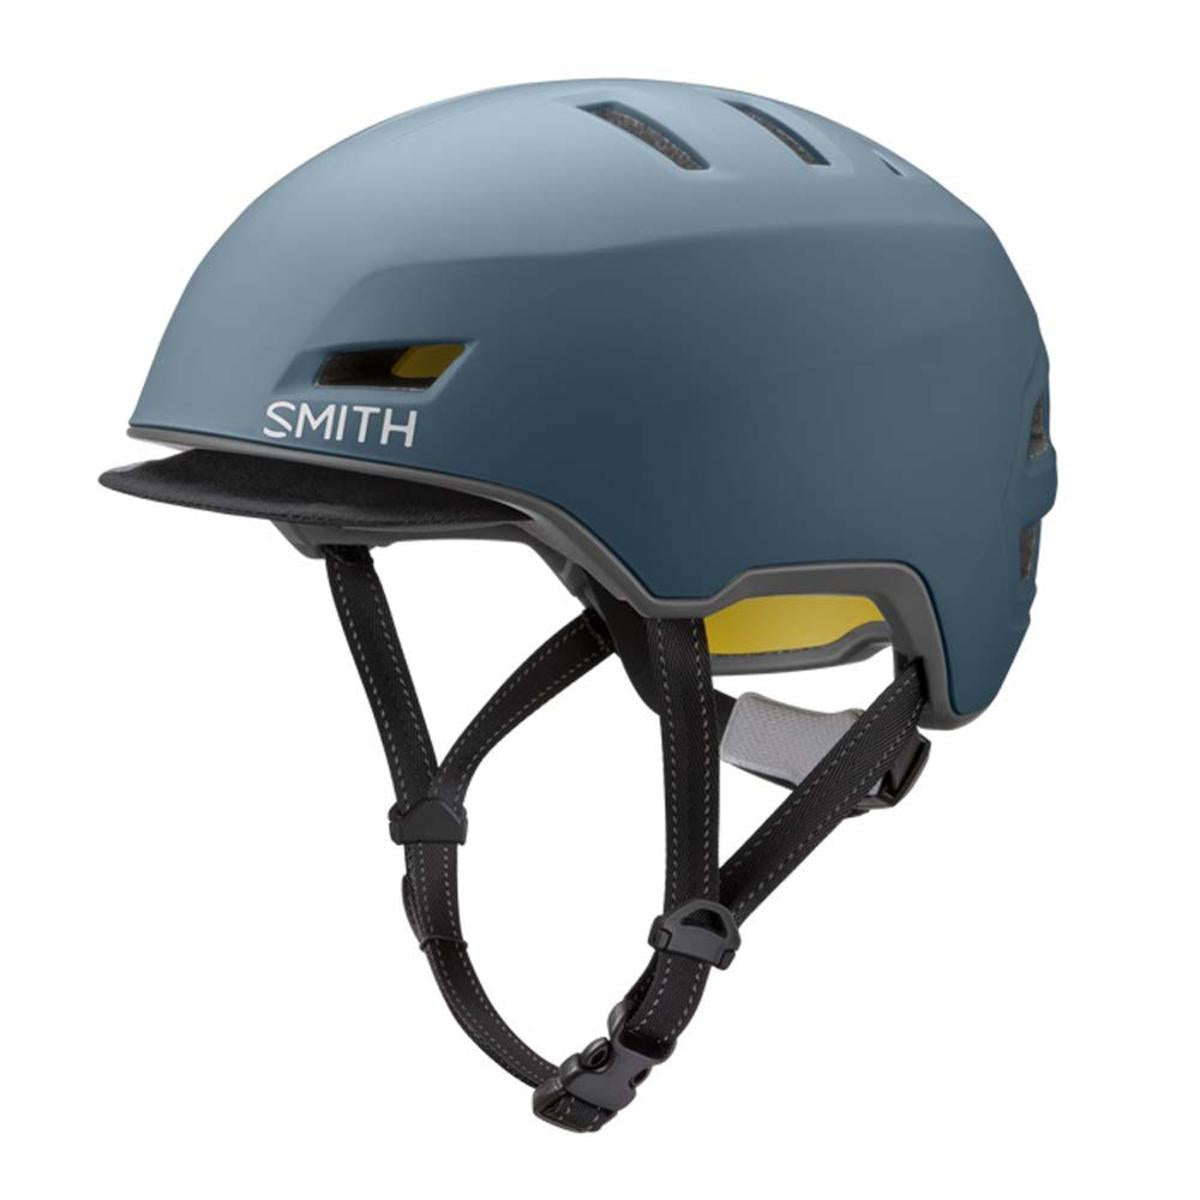 Smith Optics Express Mips Bike Helmets - Matte Stone